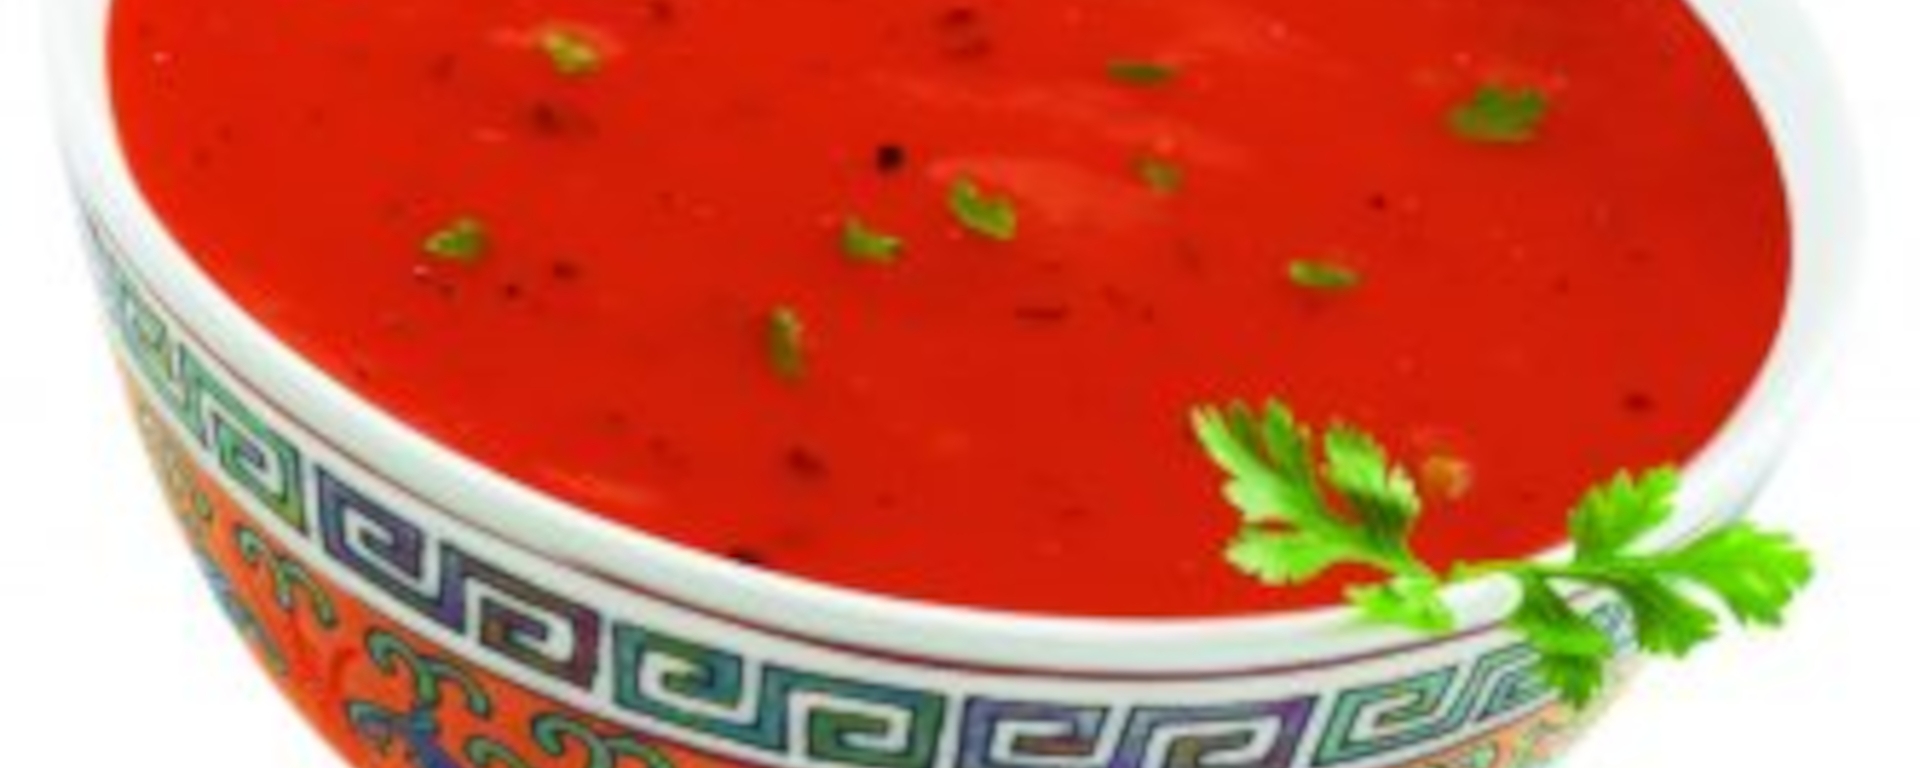 Chings Tomato Soup